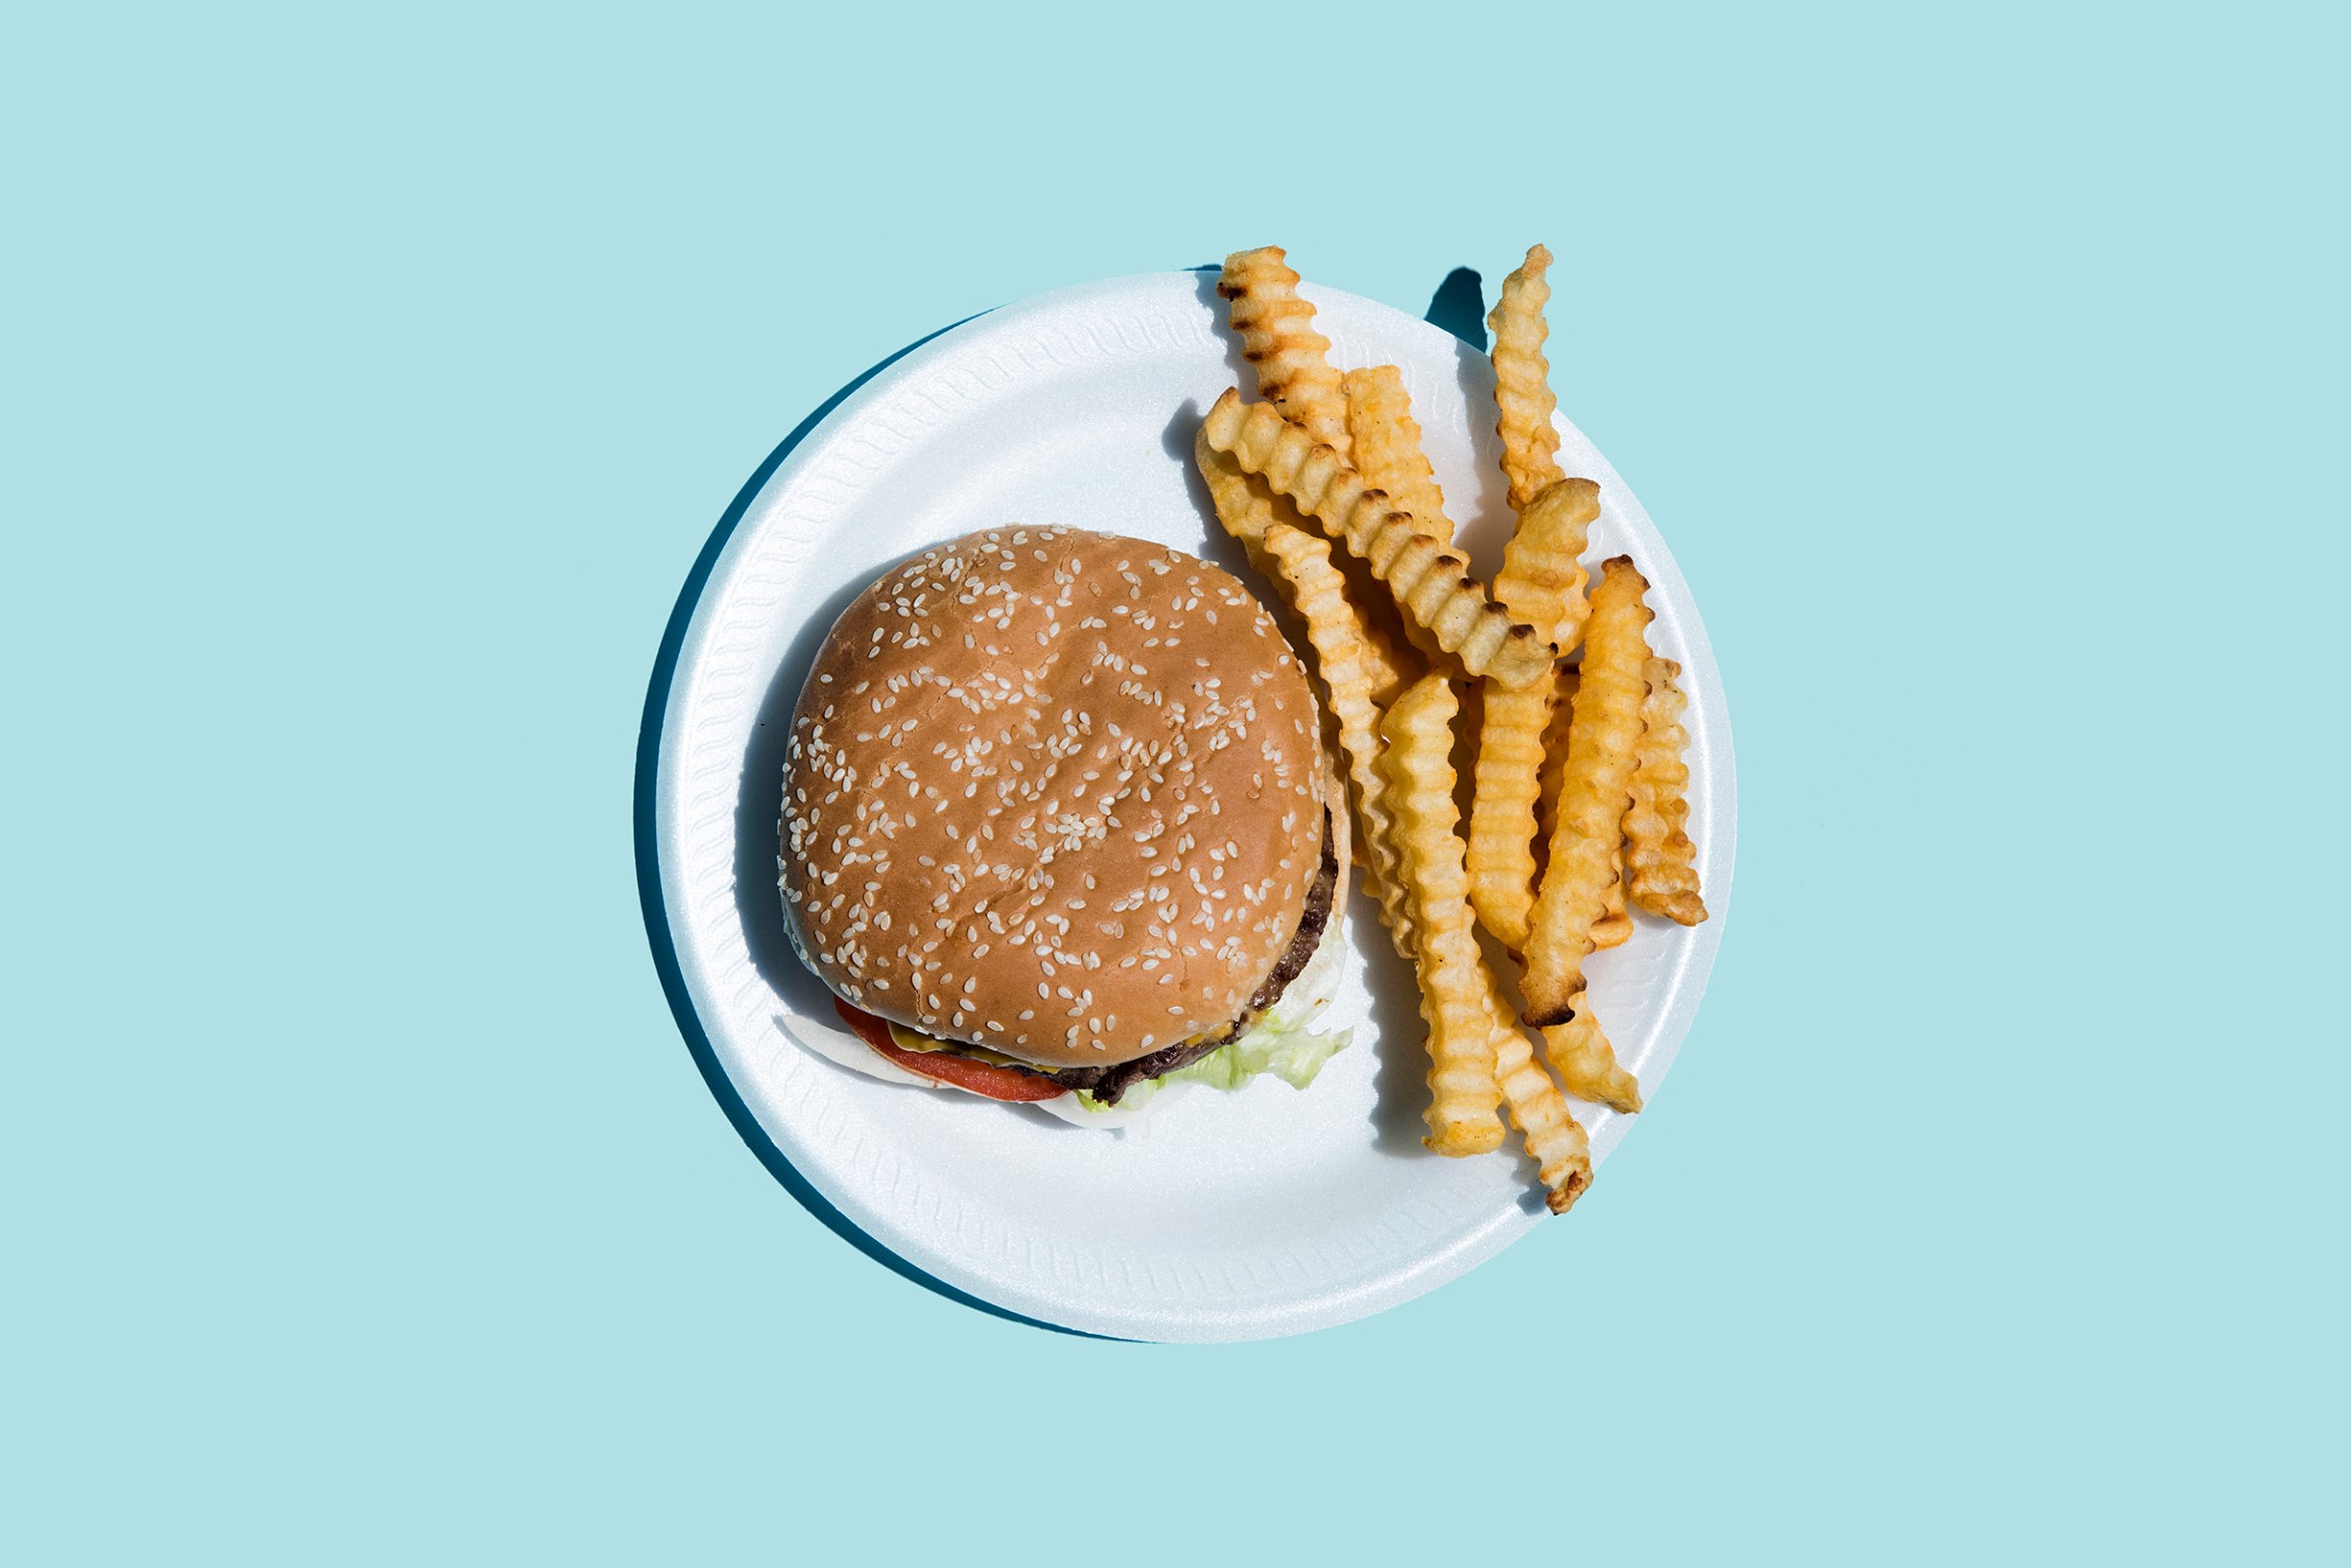 burger-fries-diet-junk-food-health-motto-stock